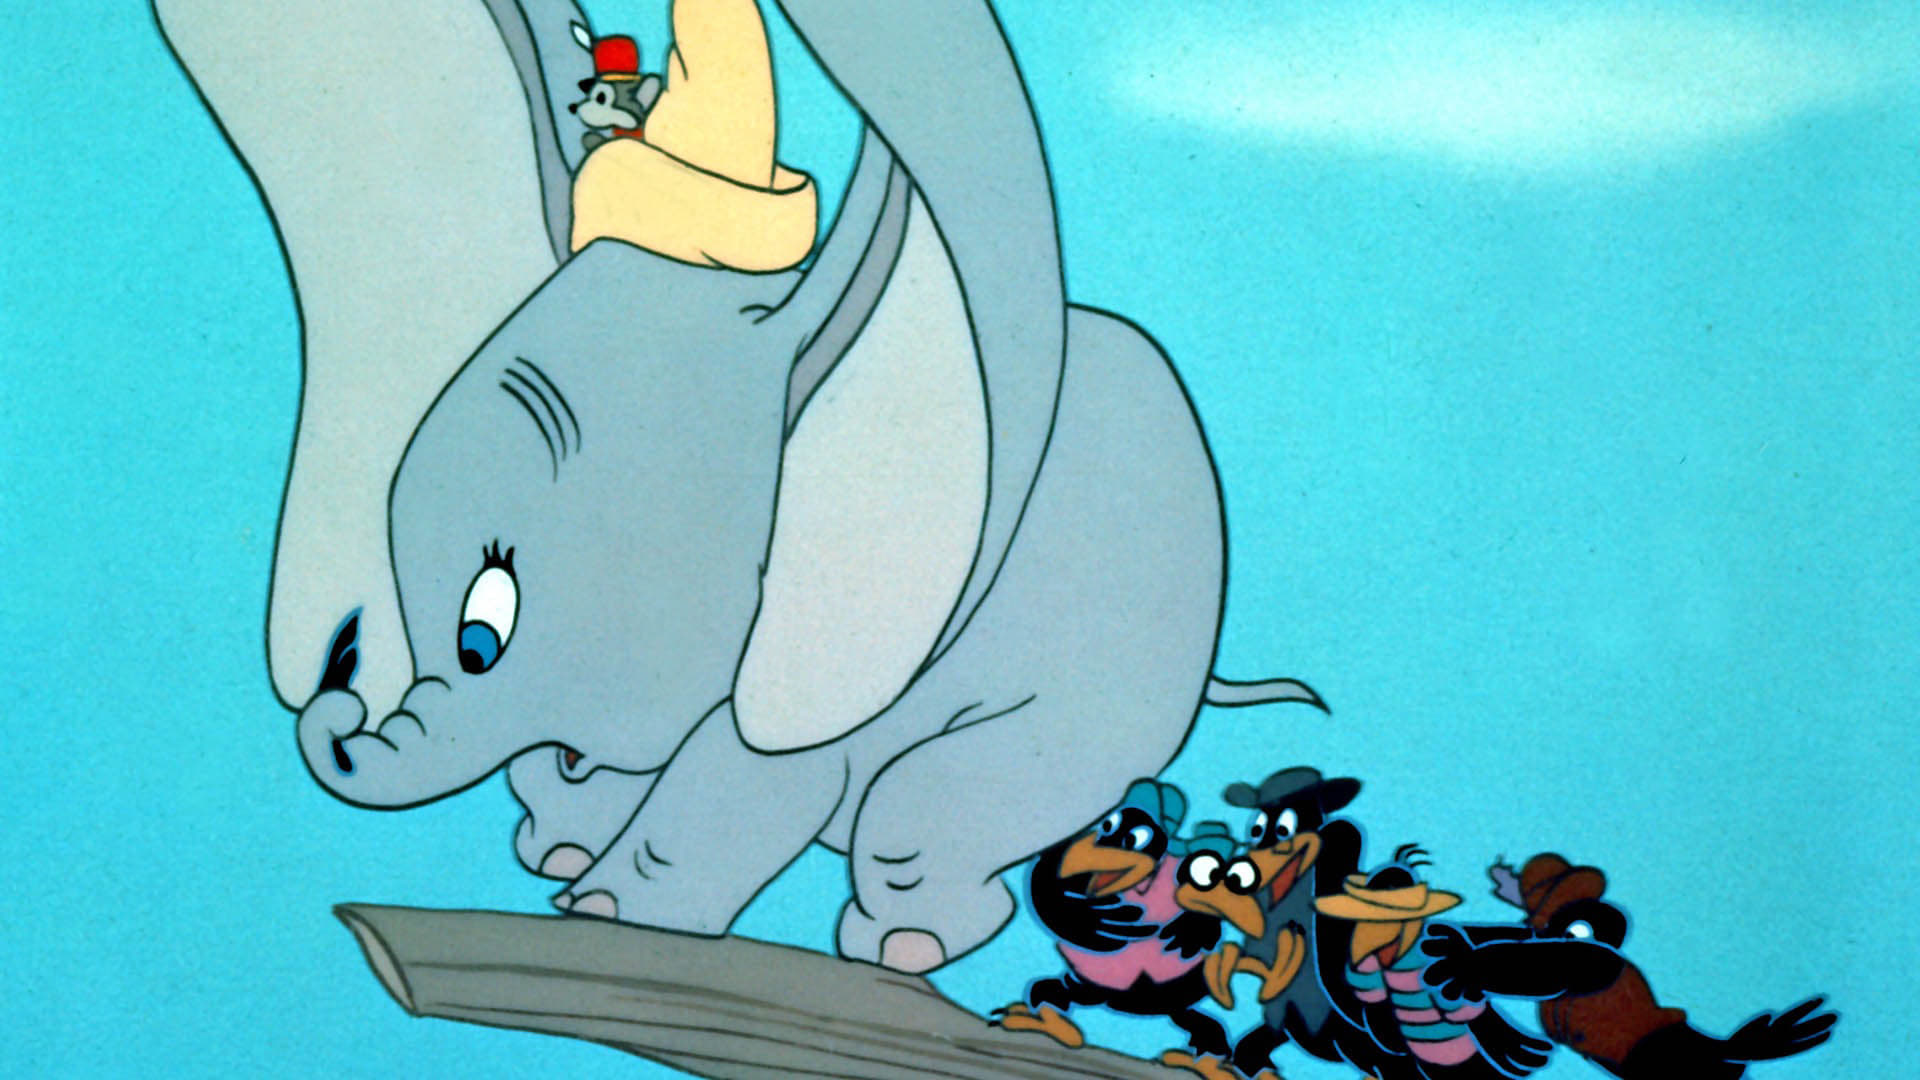 Image du film Dumbo, l'éléphant volant b6l0ojgtvbtg3wn5uuixfym0yqqjpg